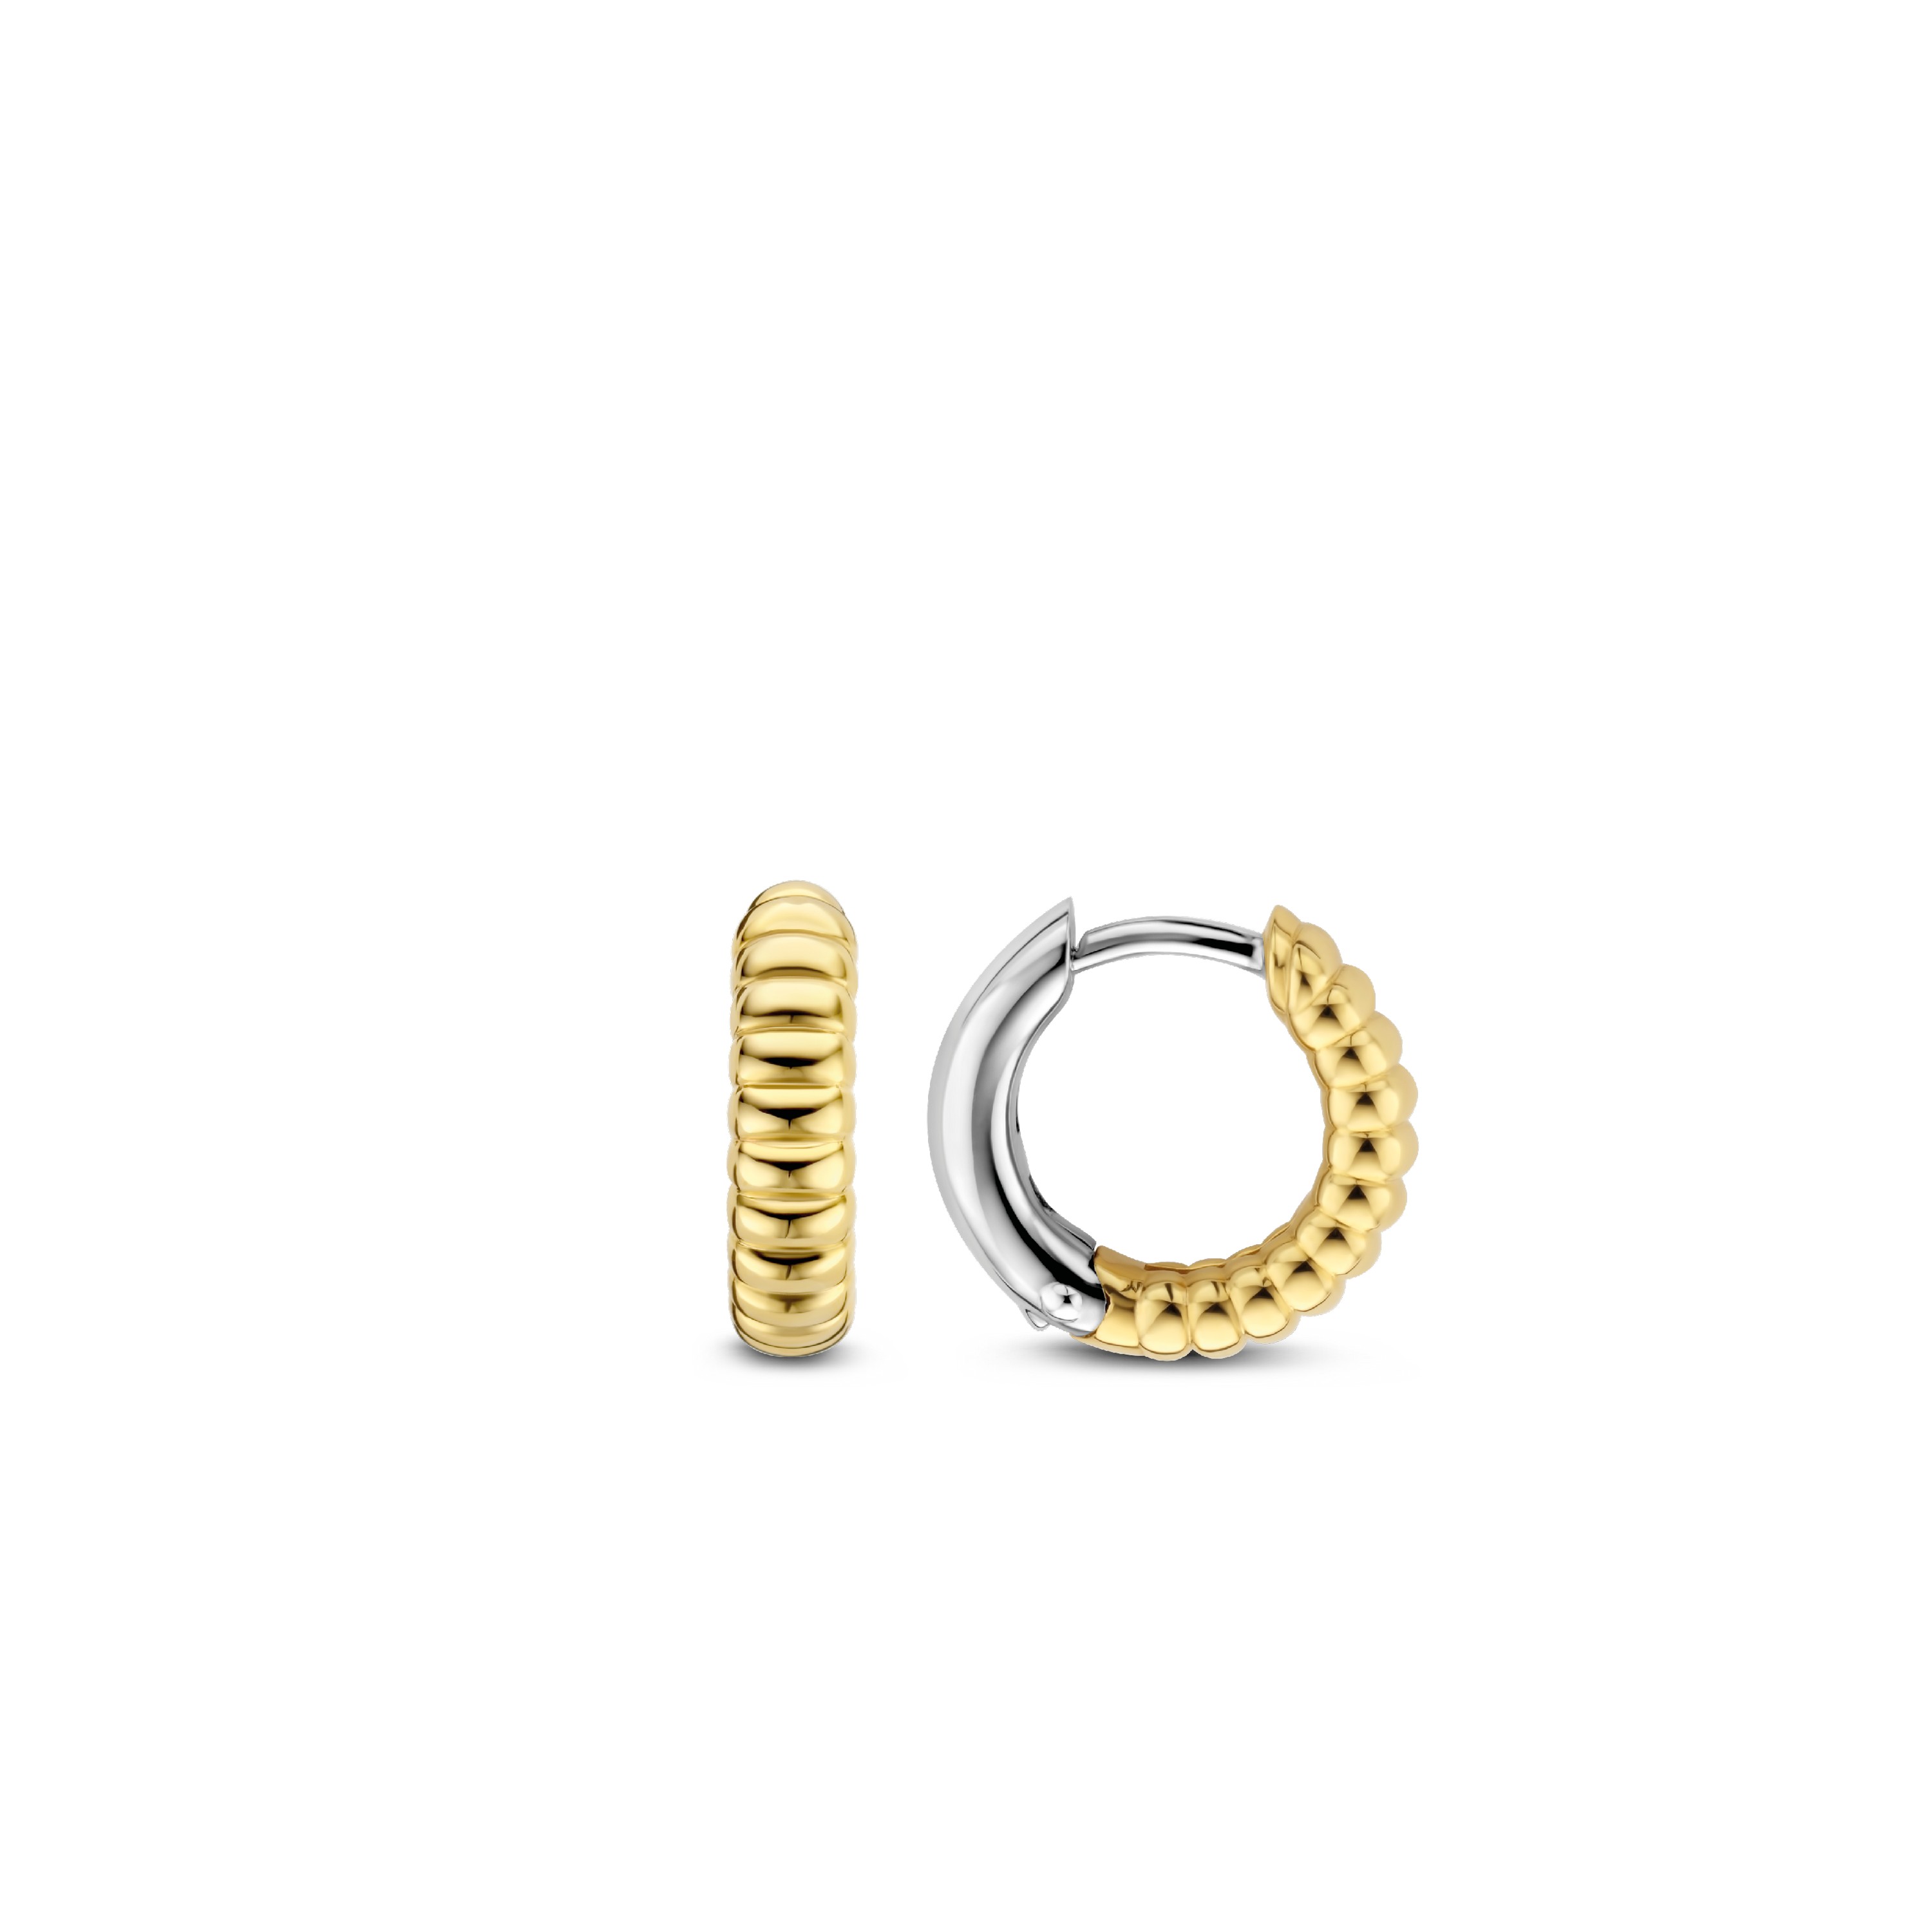 TI SENTO - Milano Earrings 7839SY Image 2 Gala Jewelers Inc. White Oak, PA